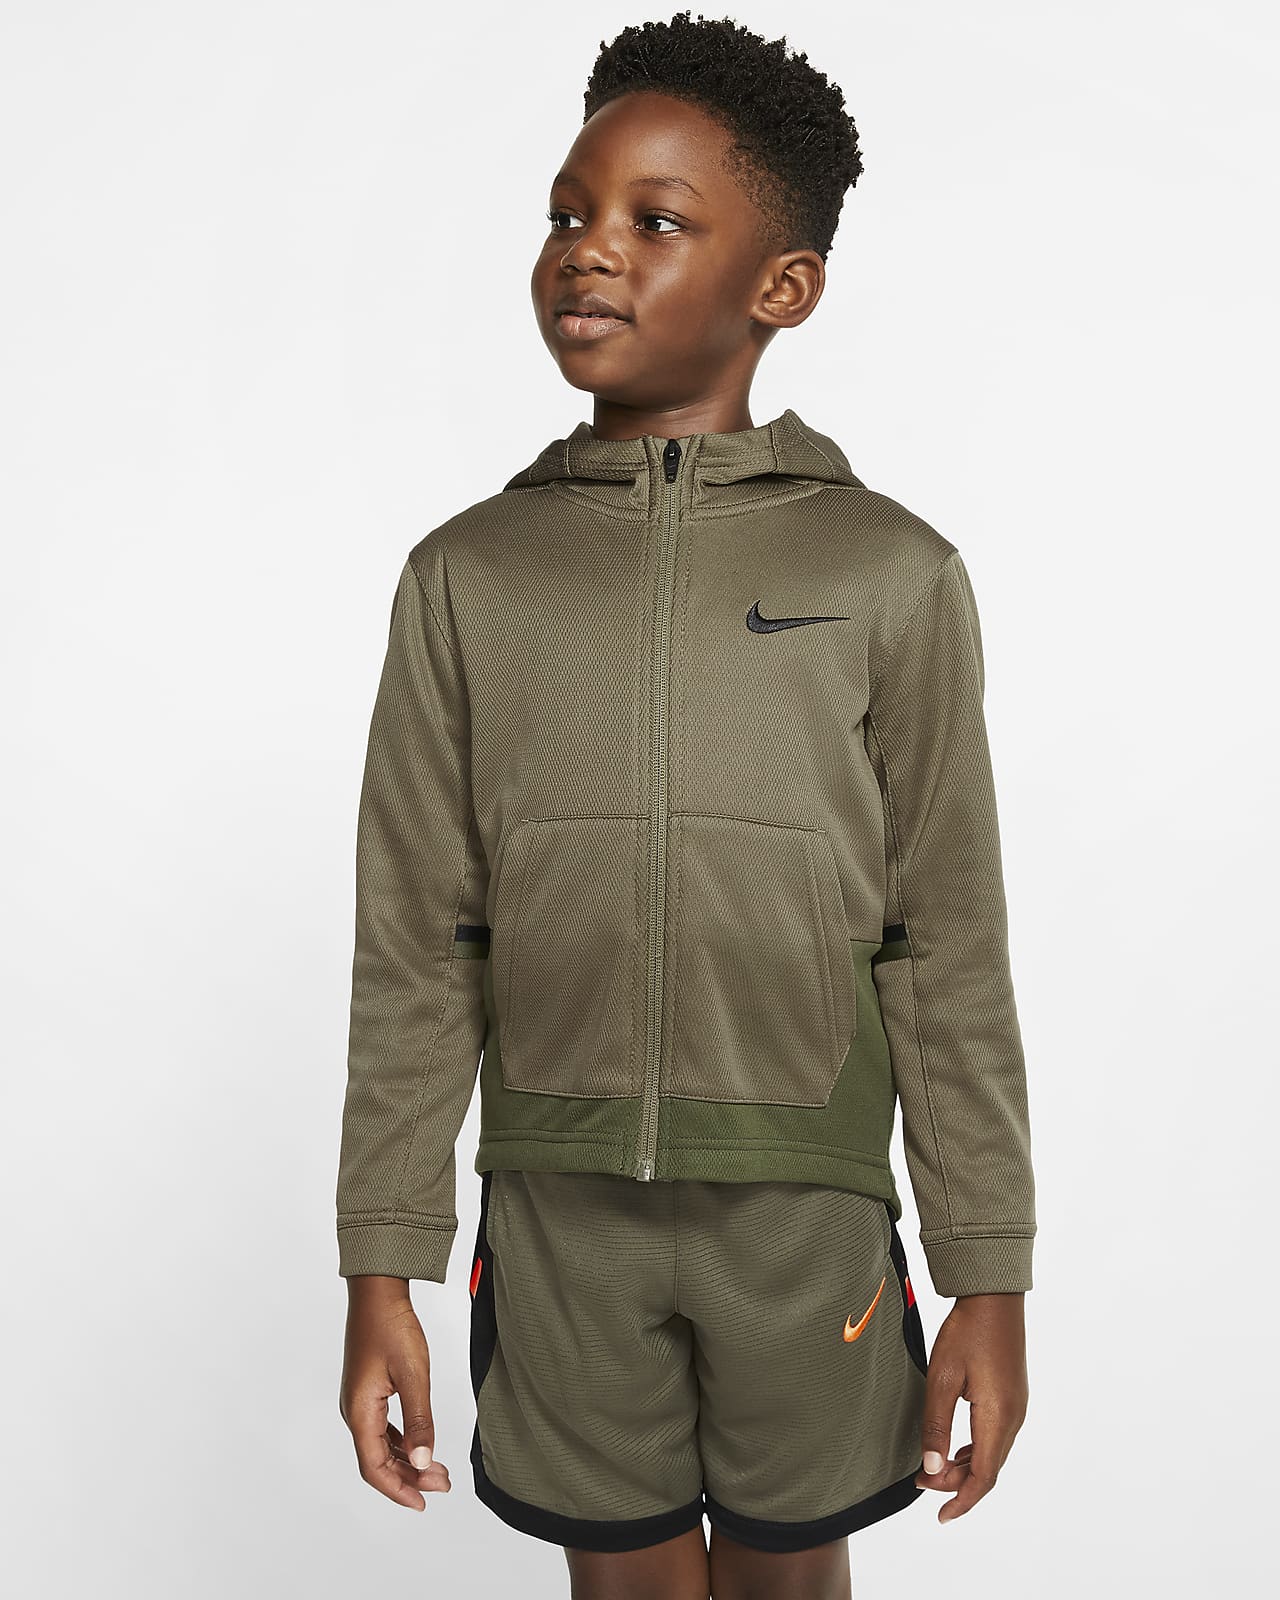 Nike Therma Elite Little Kids' Full-Zip 